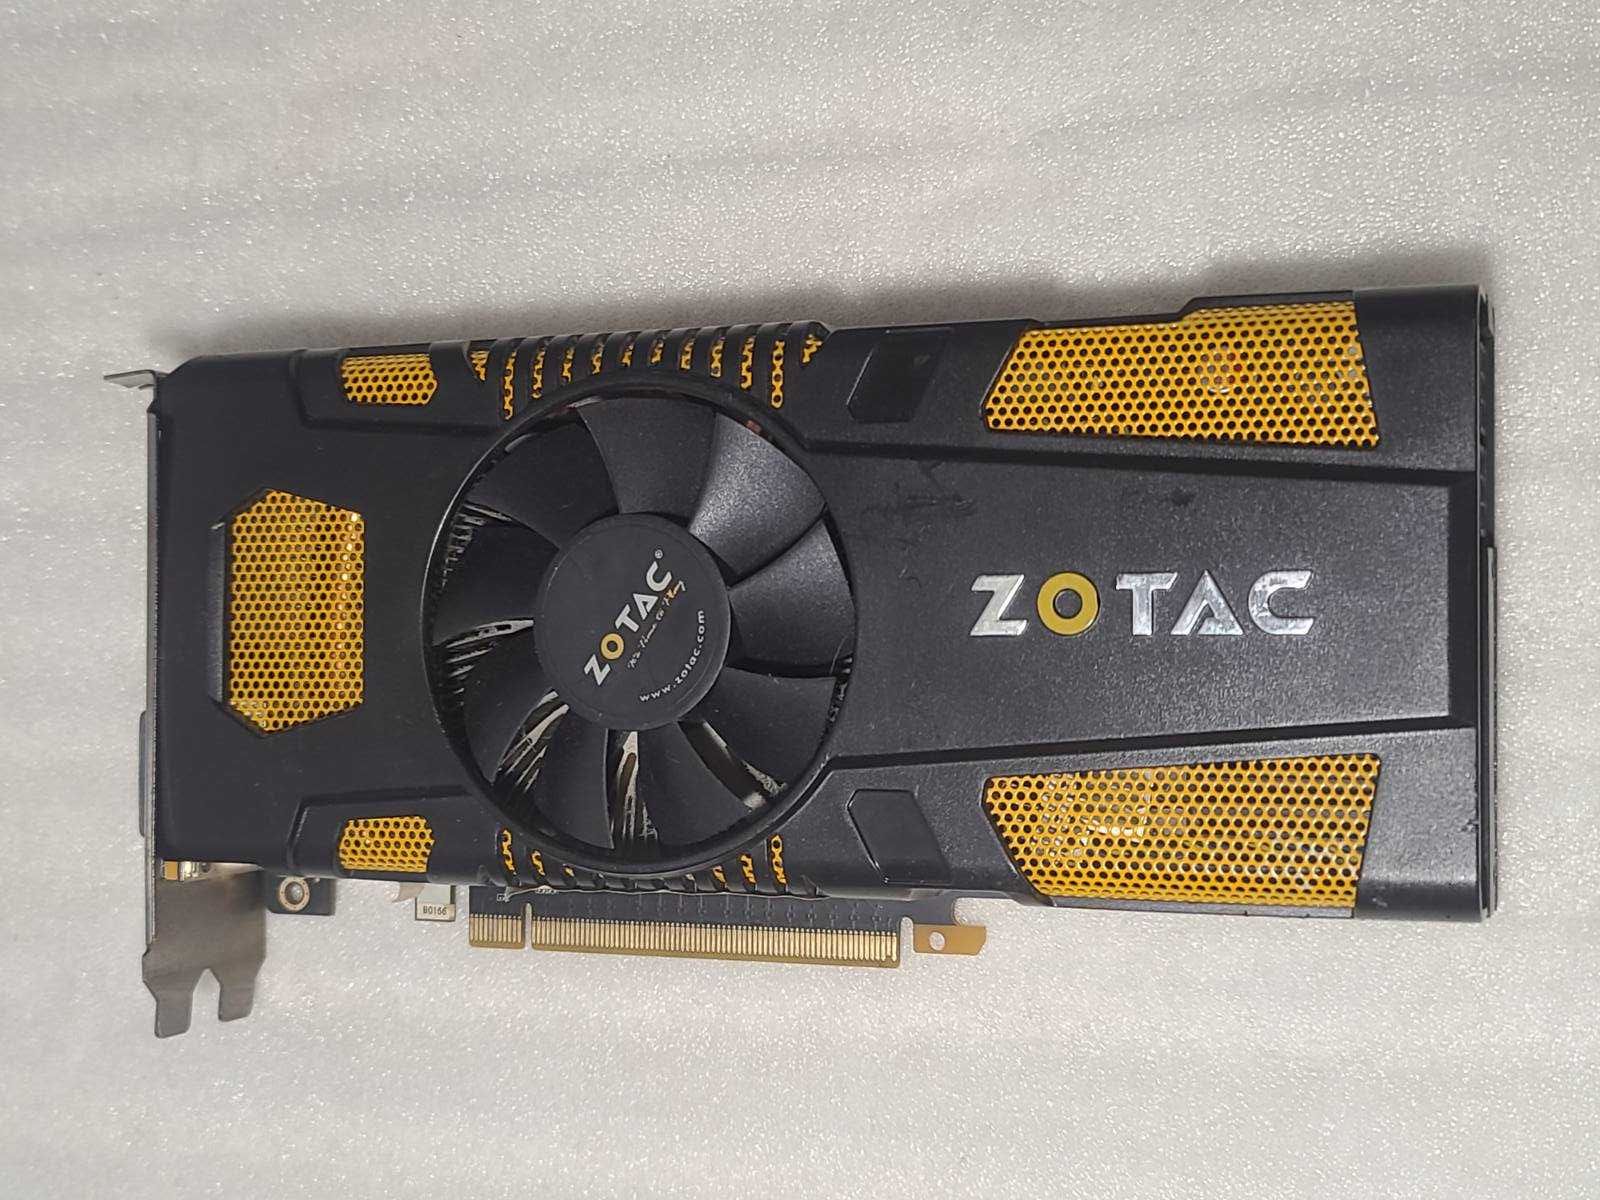 Видеокарта Zotac GTX 570 на Запчасти или под Восстановление